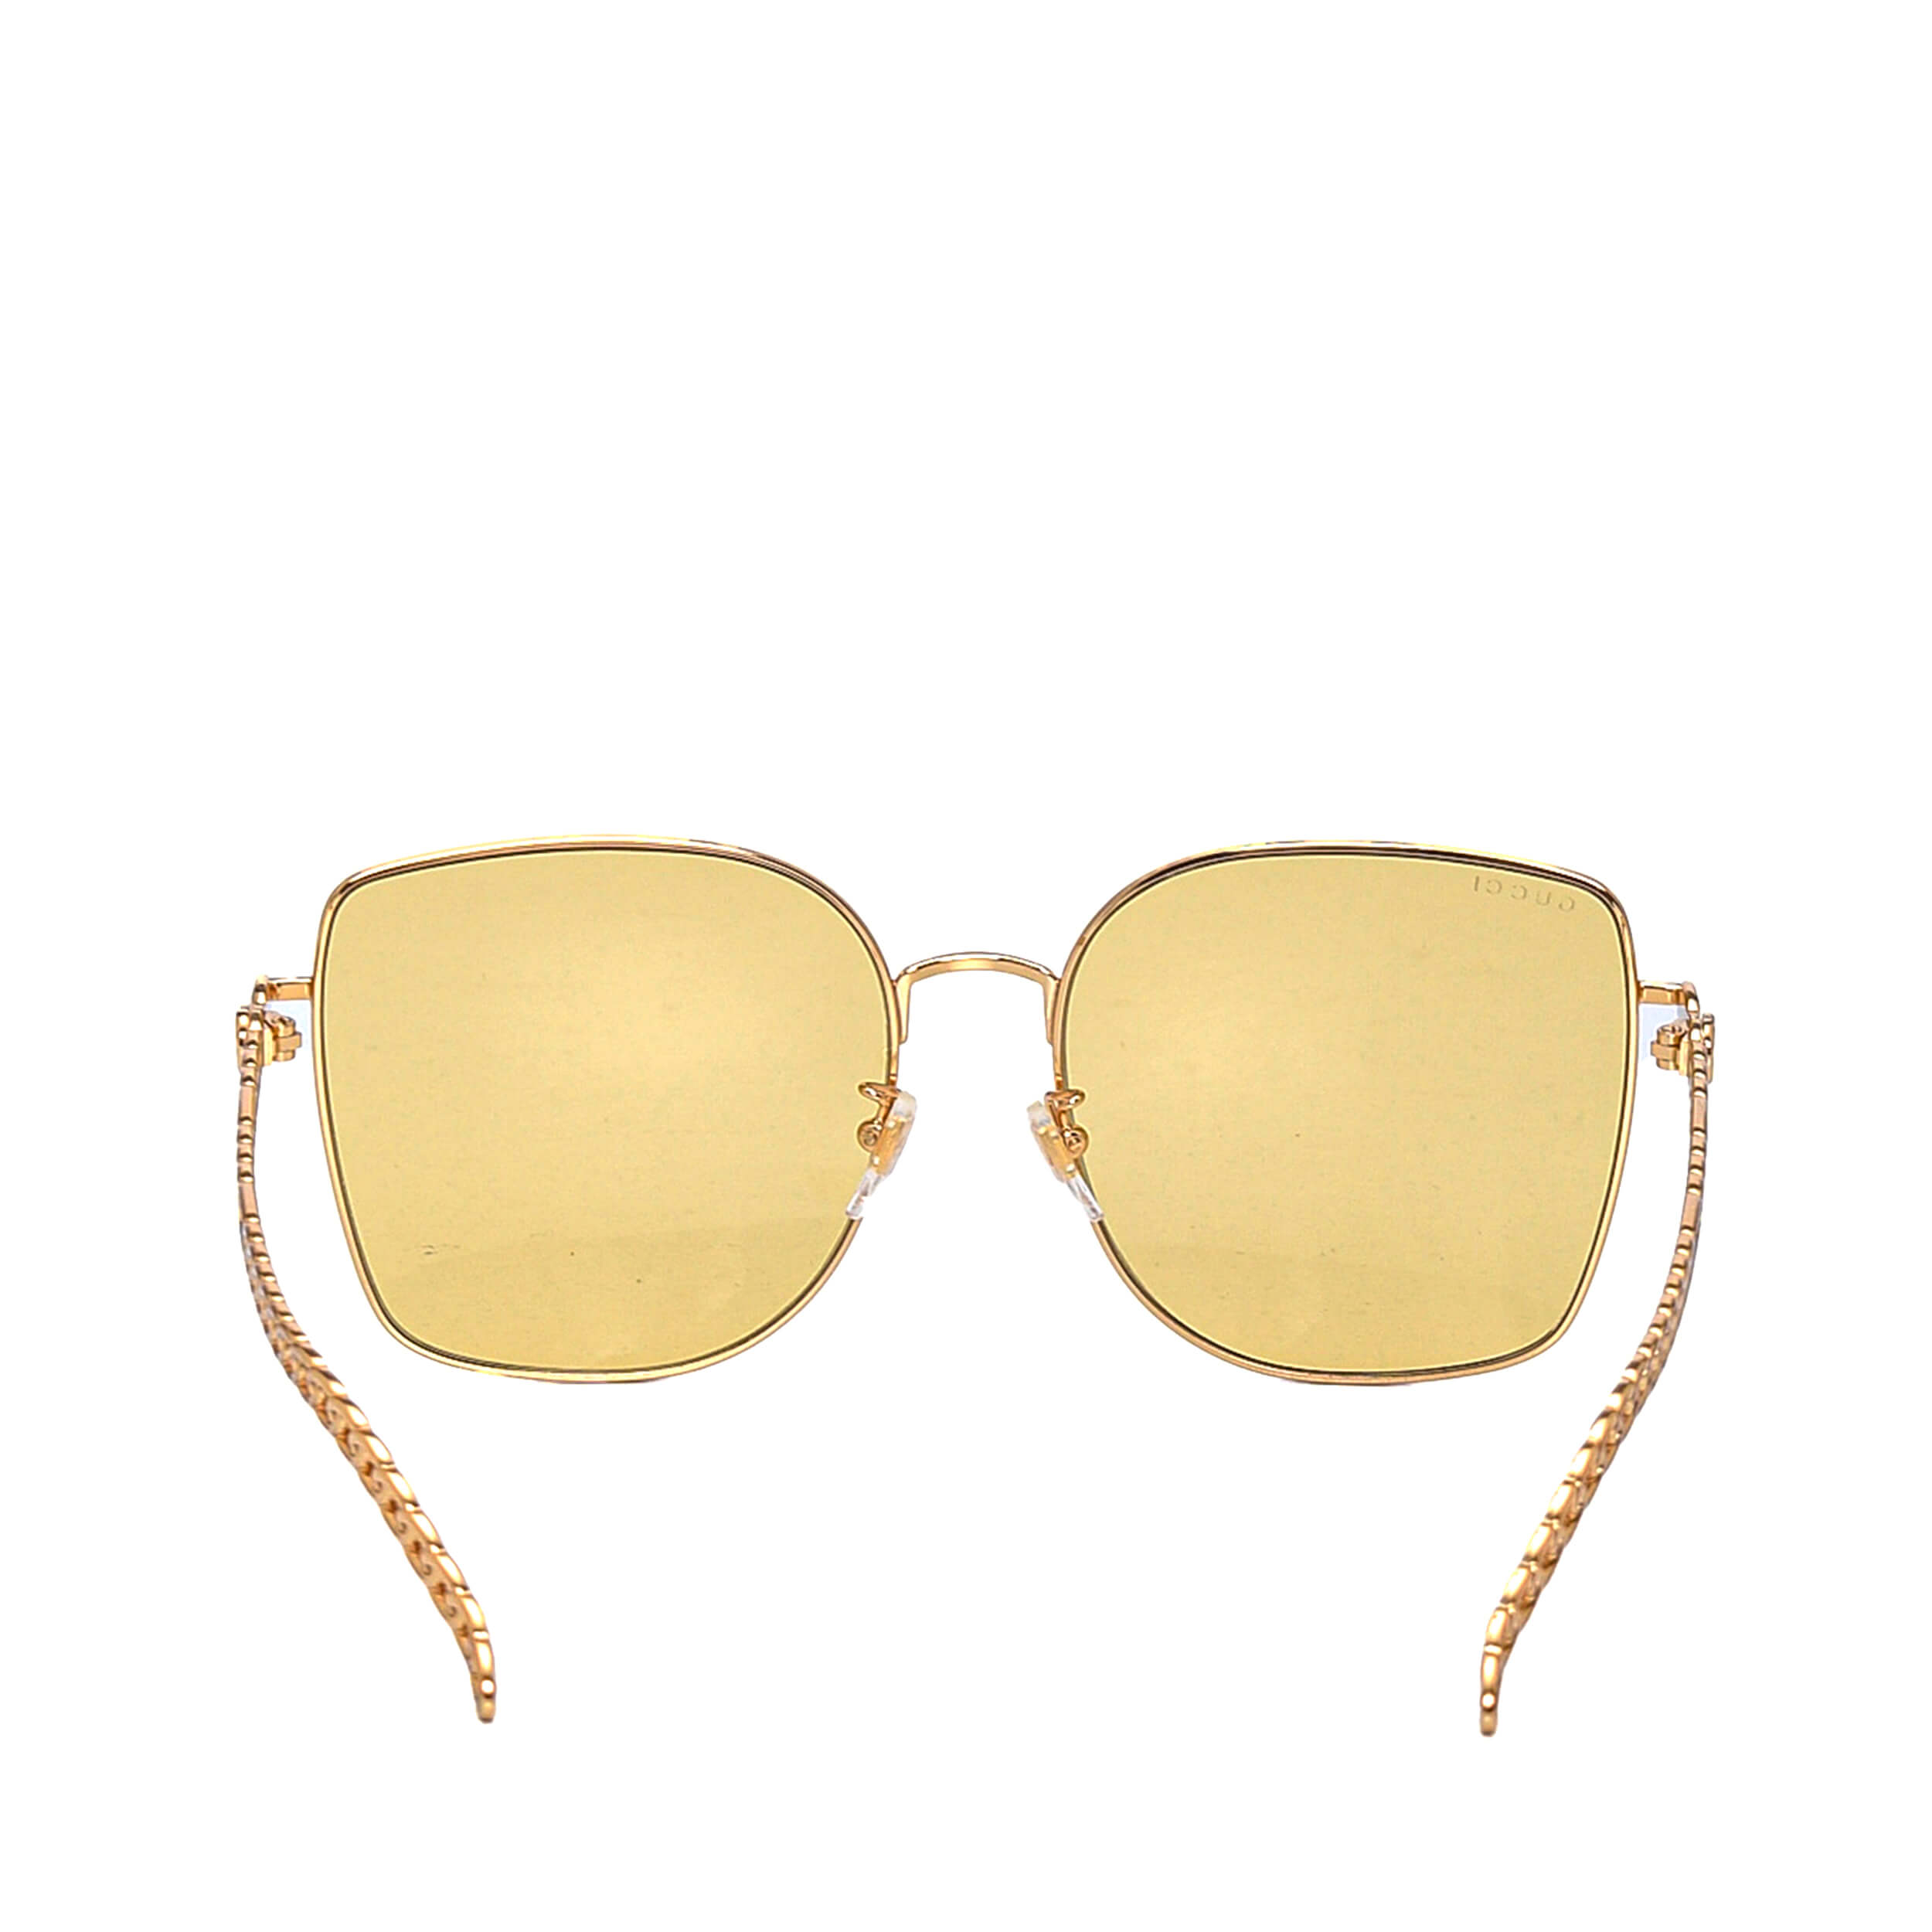 Gucci - Yellow&Gold Acetate Sunglasses